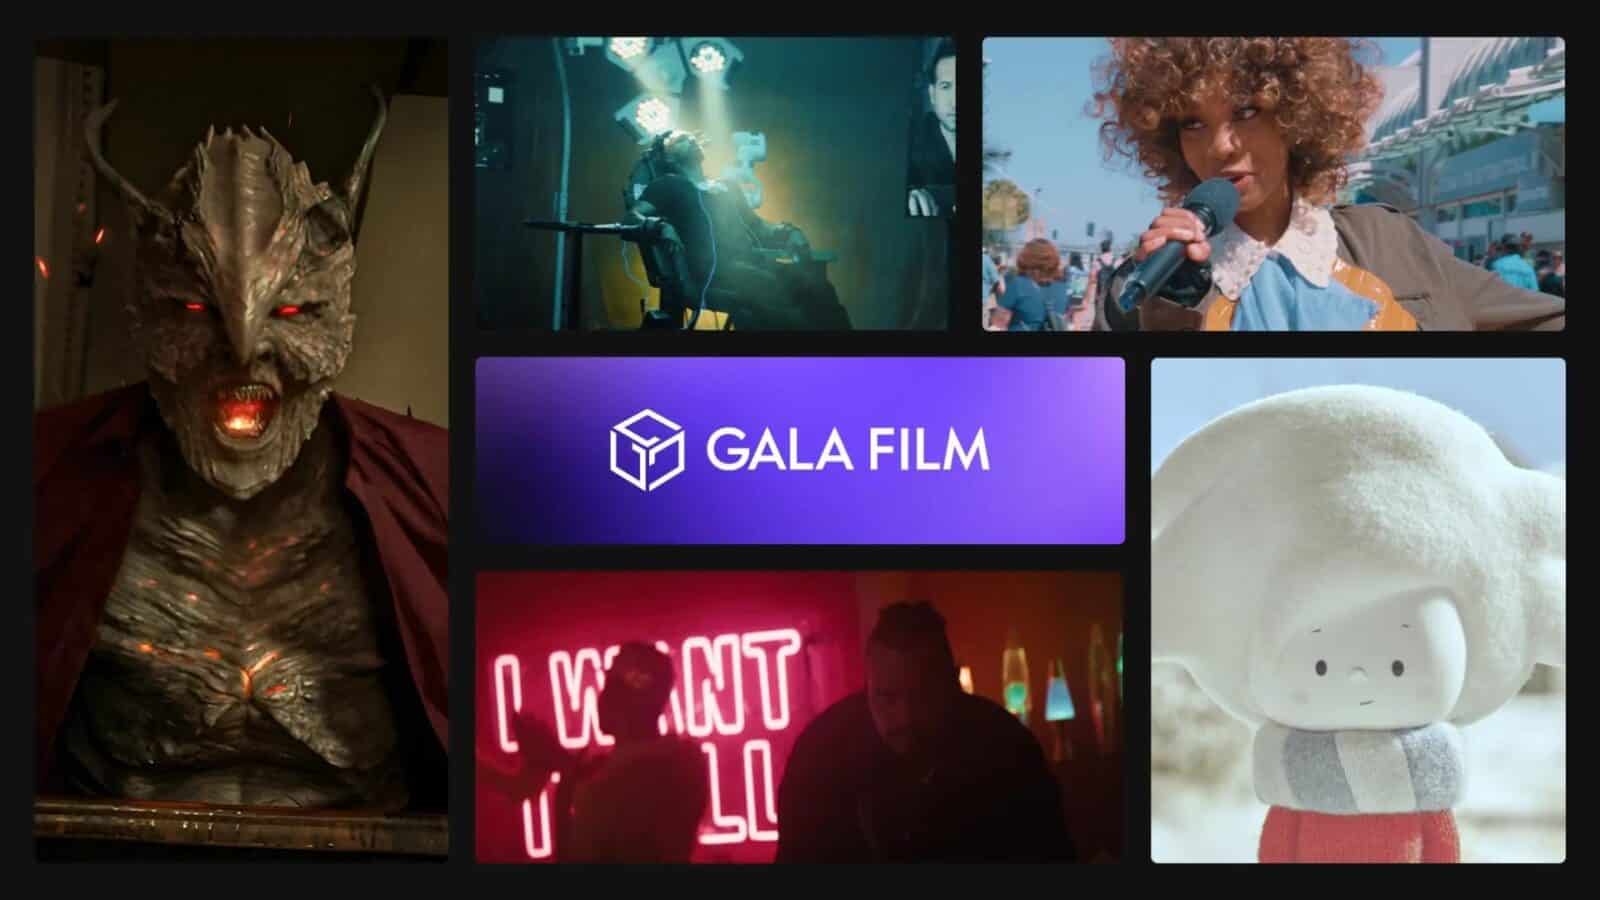 Gala Film Introduces Web3 to Cinema